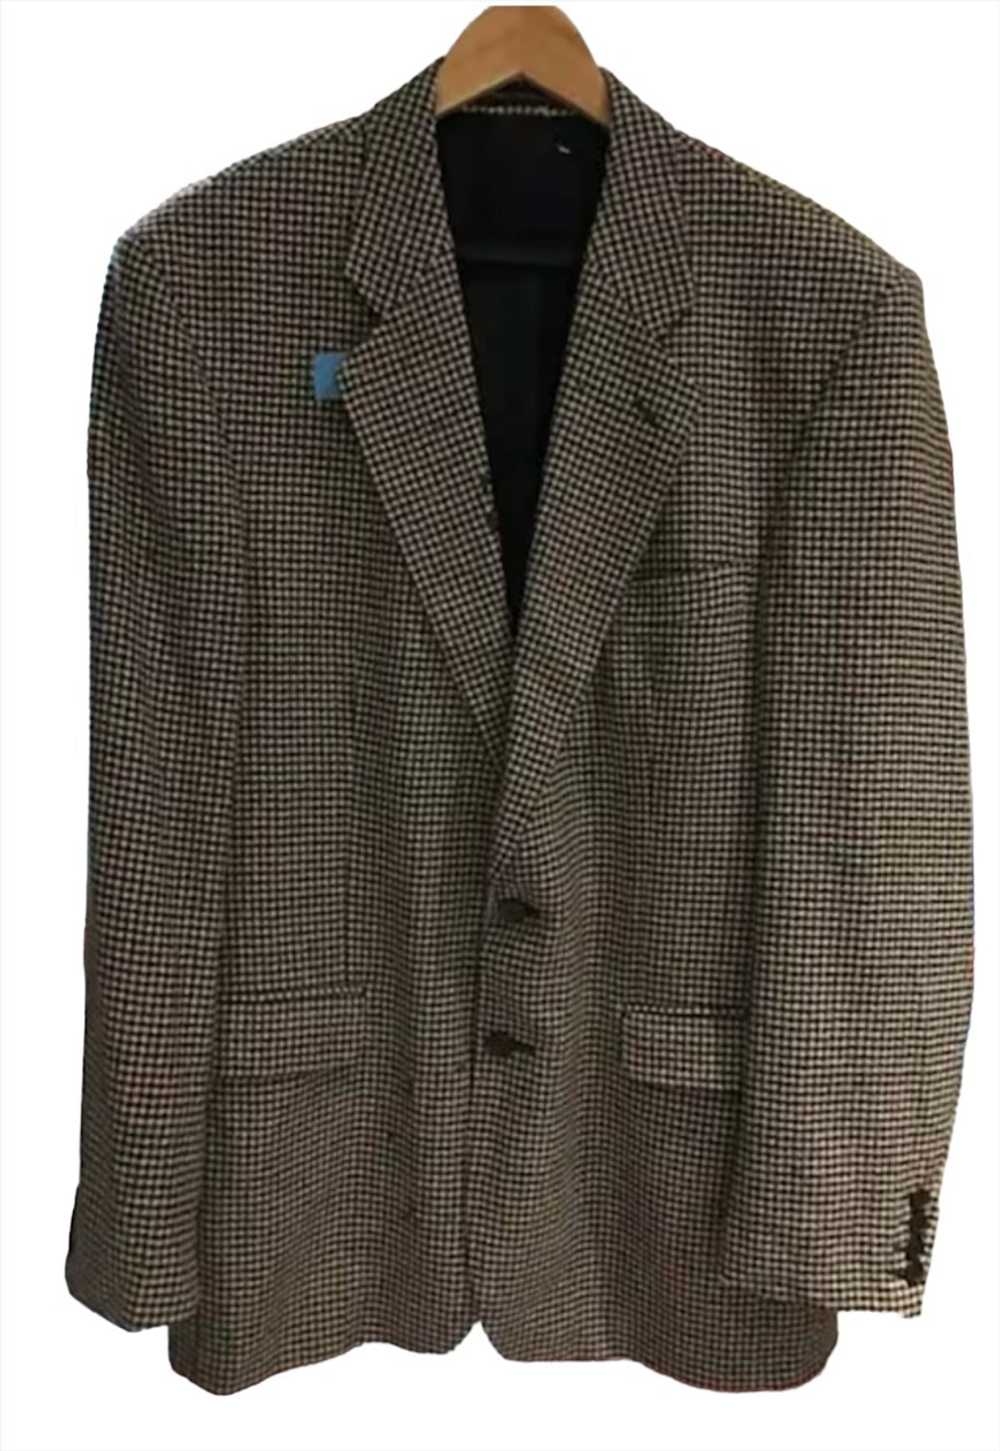 Small dogtooth vintage 80s tailored blazer - image 2